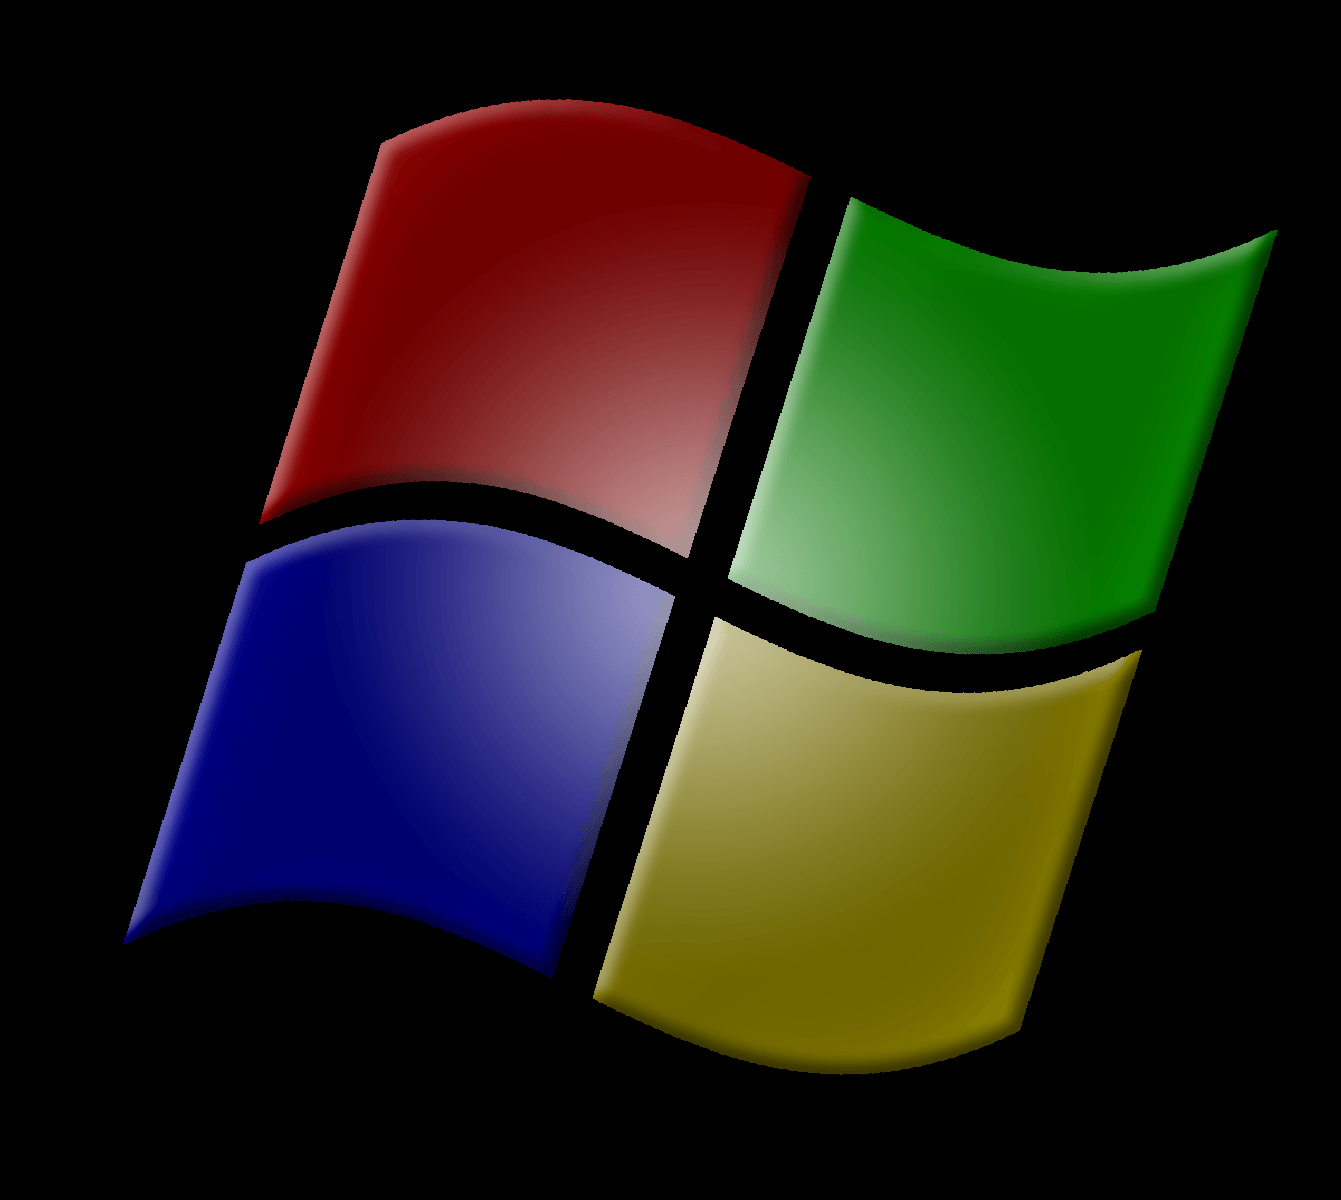 Dark Windows Logo - Windows Updates Released, patches items in Microsoft NET, windows ...